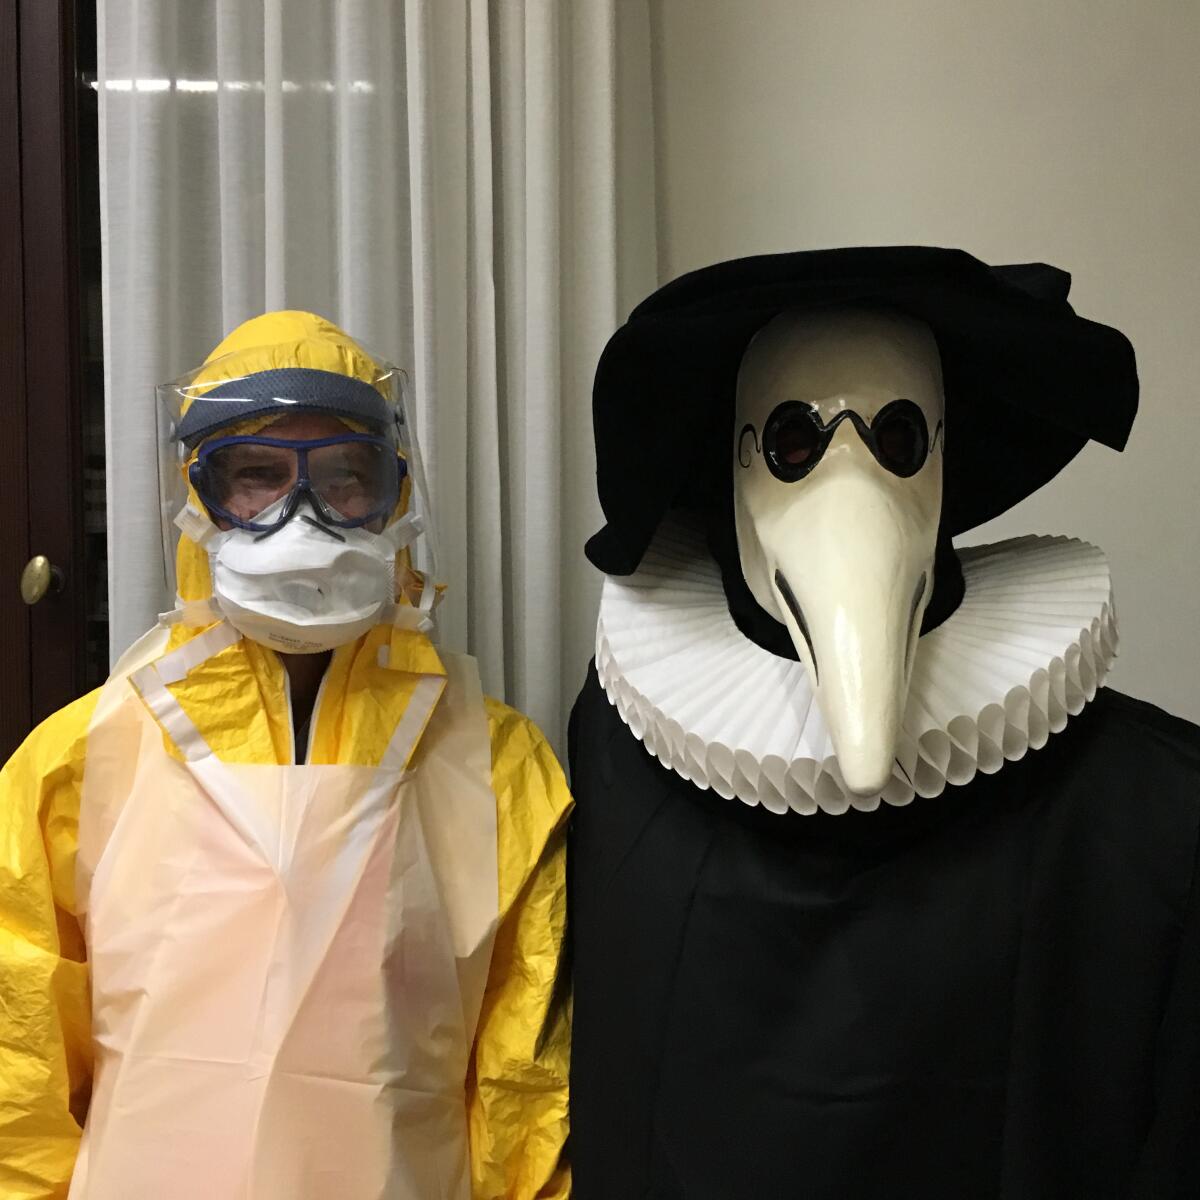 Geoff Manaugh and Dr. Luigi Bertinato wearing plague gear from different eras.